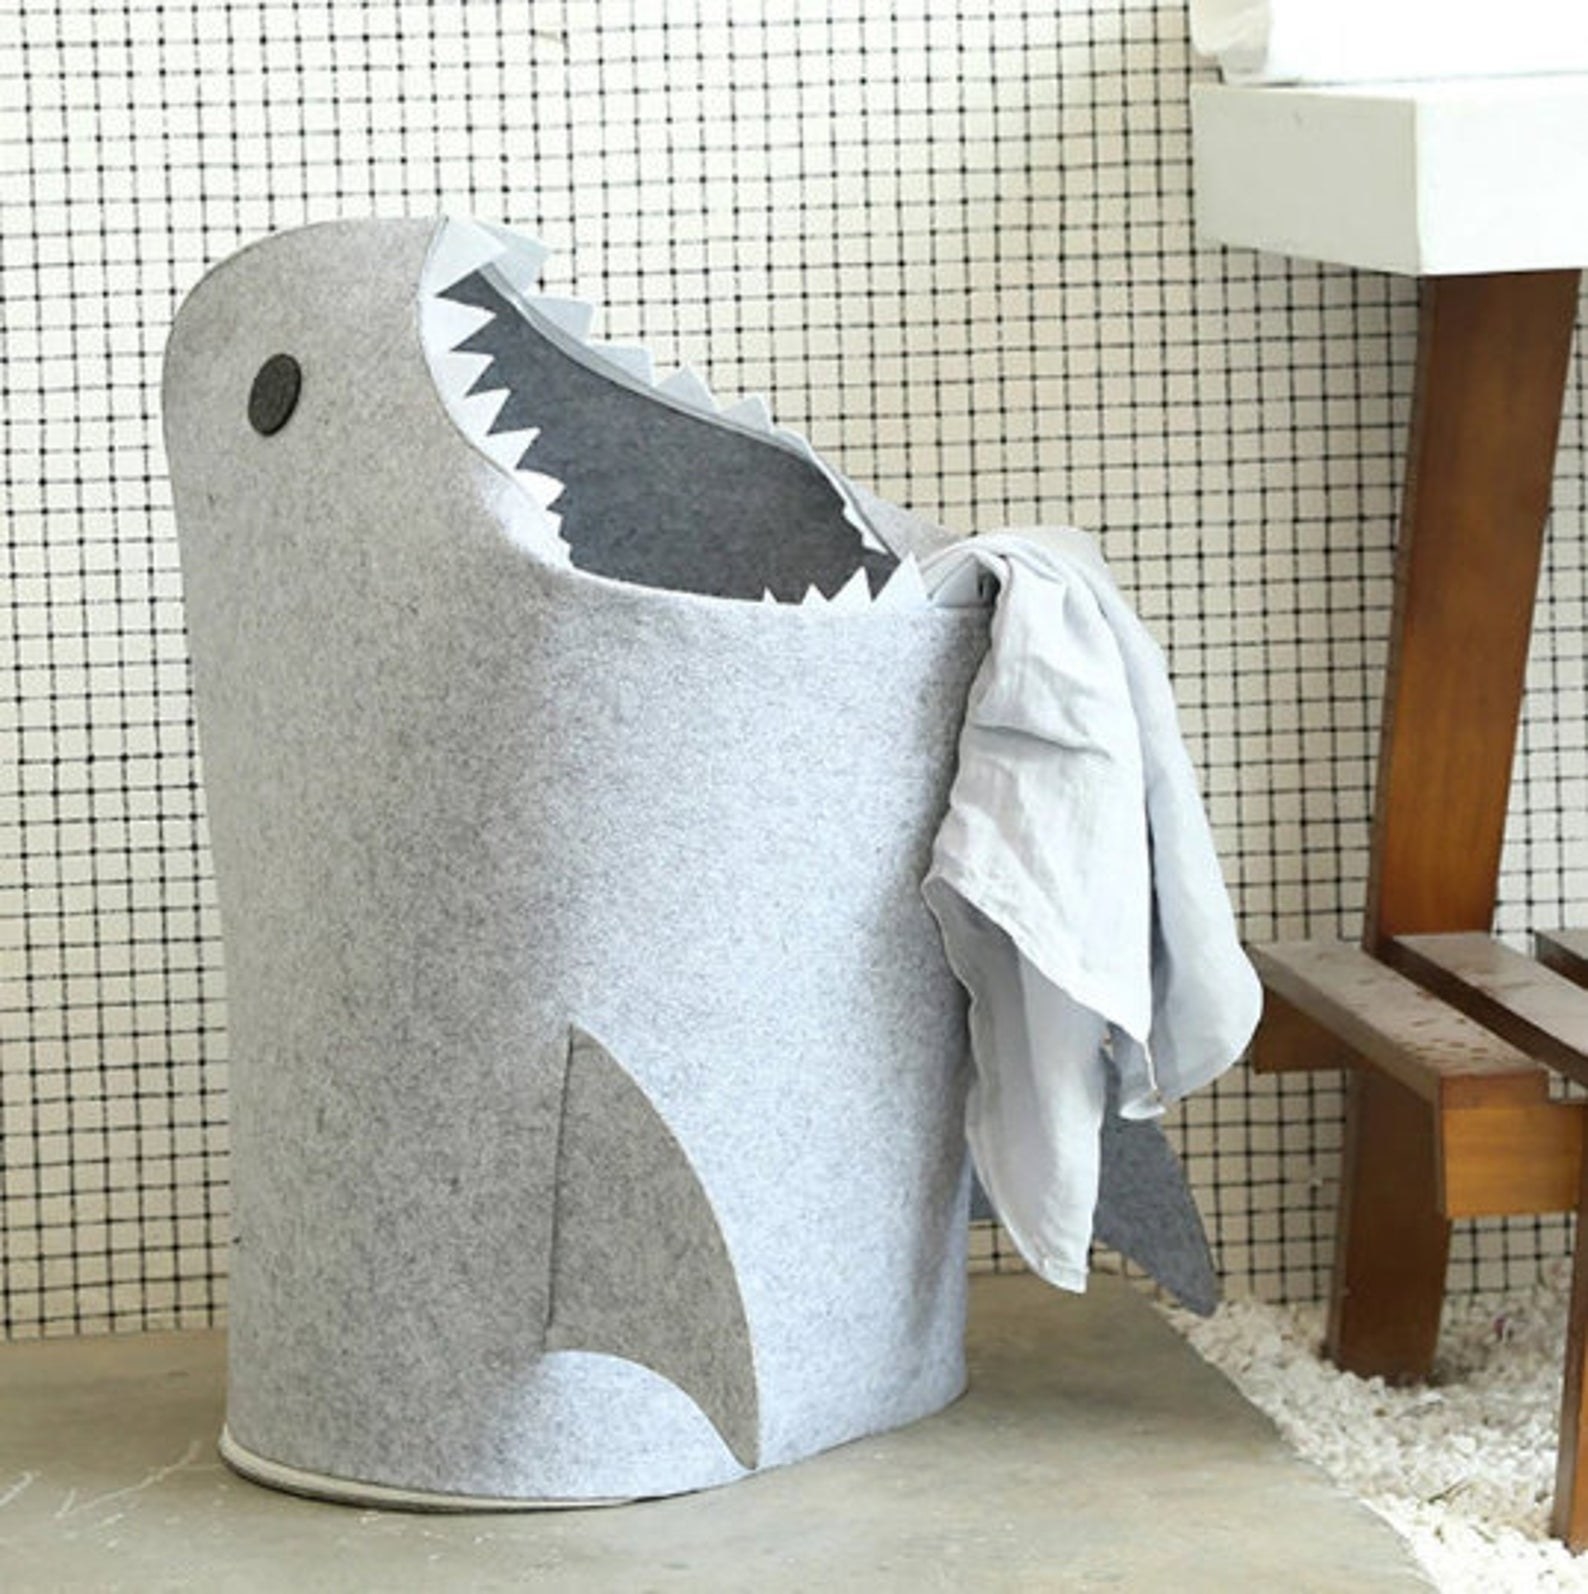 the shark laundry hamper